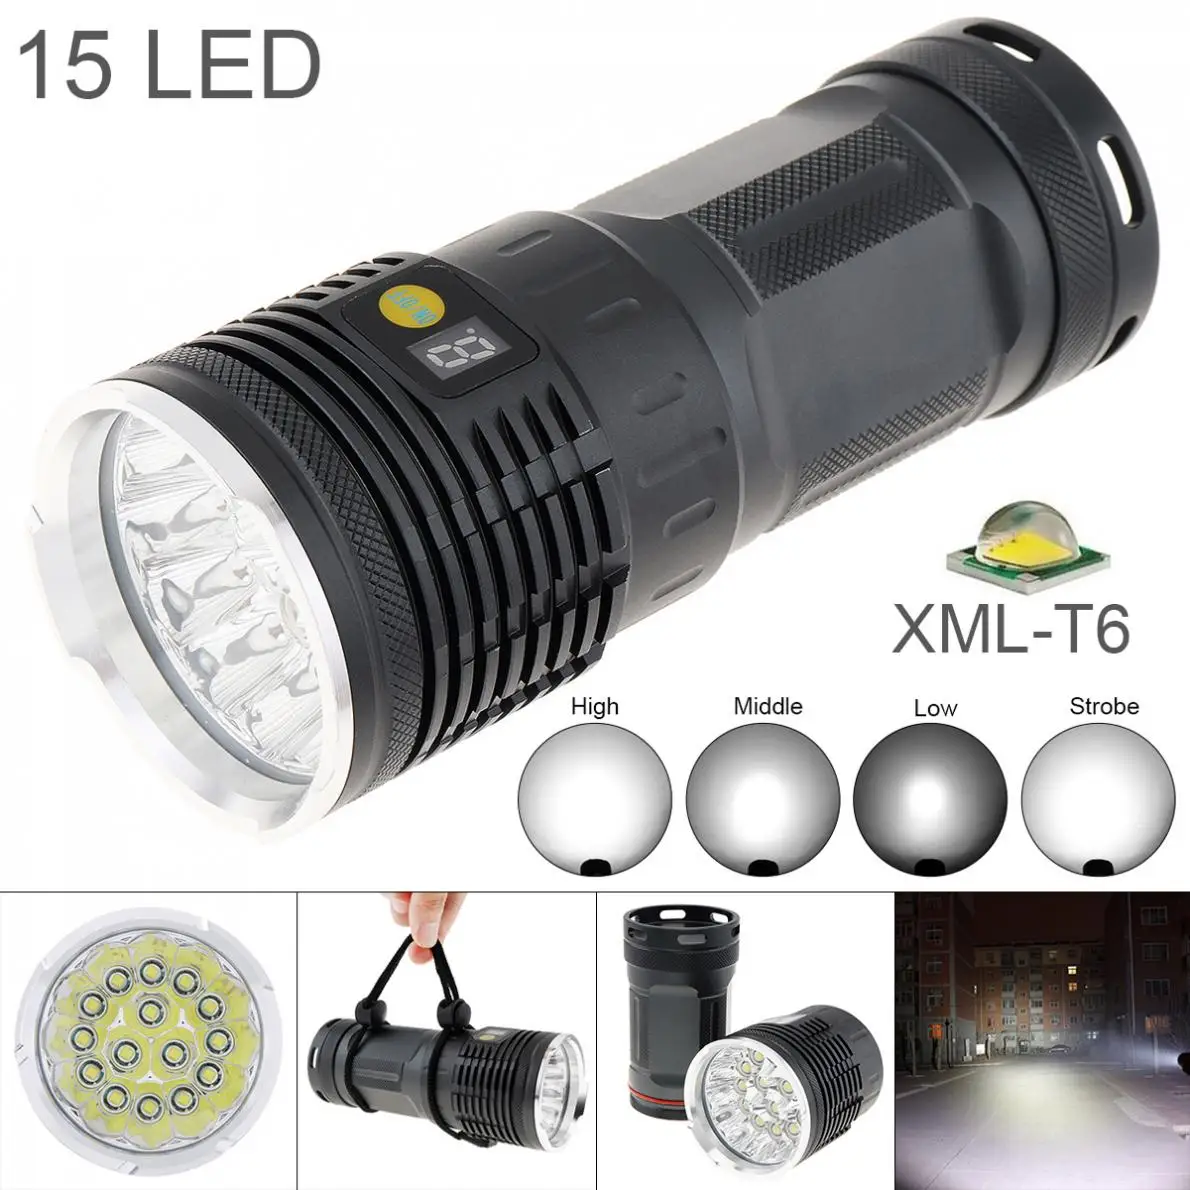 

15 XML-T6 LED 7500 Lumens Waterproof IP65 Aluminium Alloy Flashlight with 4 Modes Light and DC USB Cable + Portable Sachet